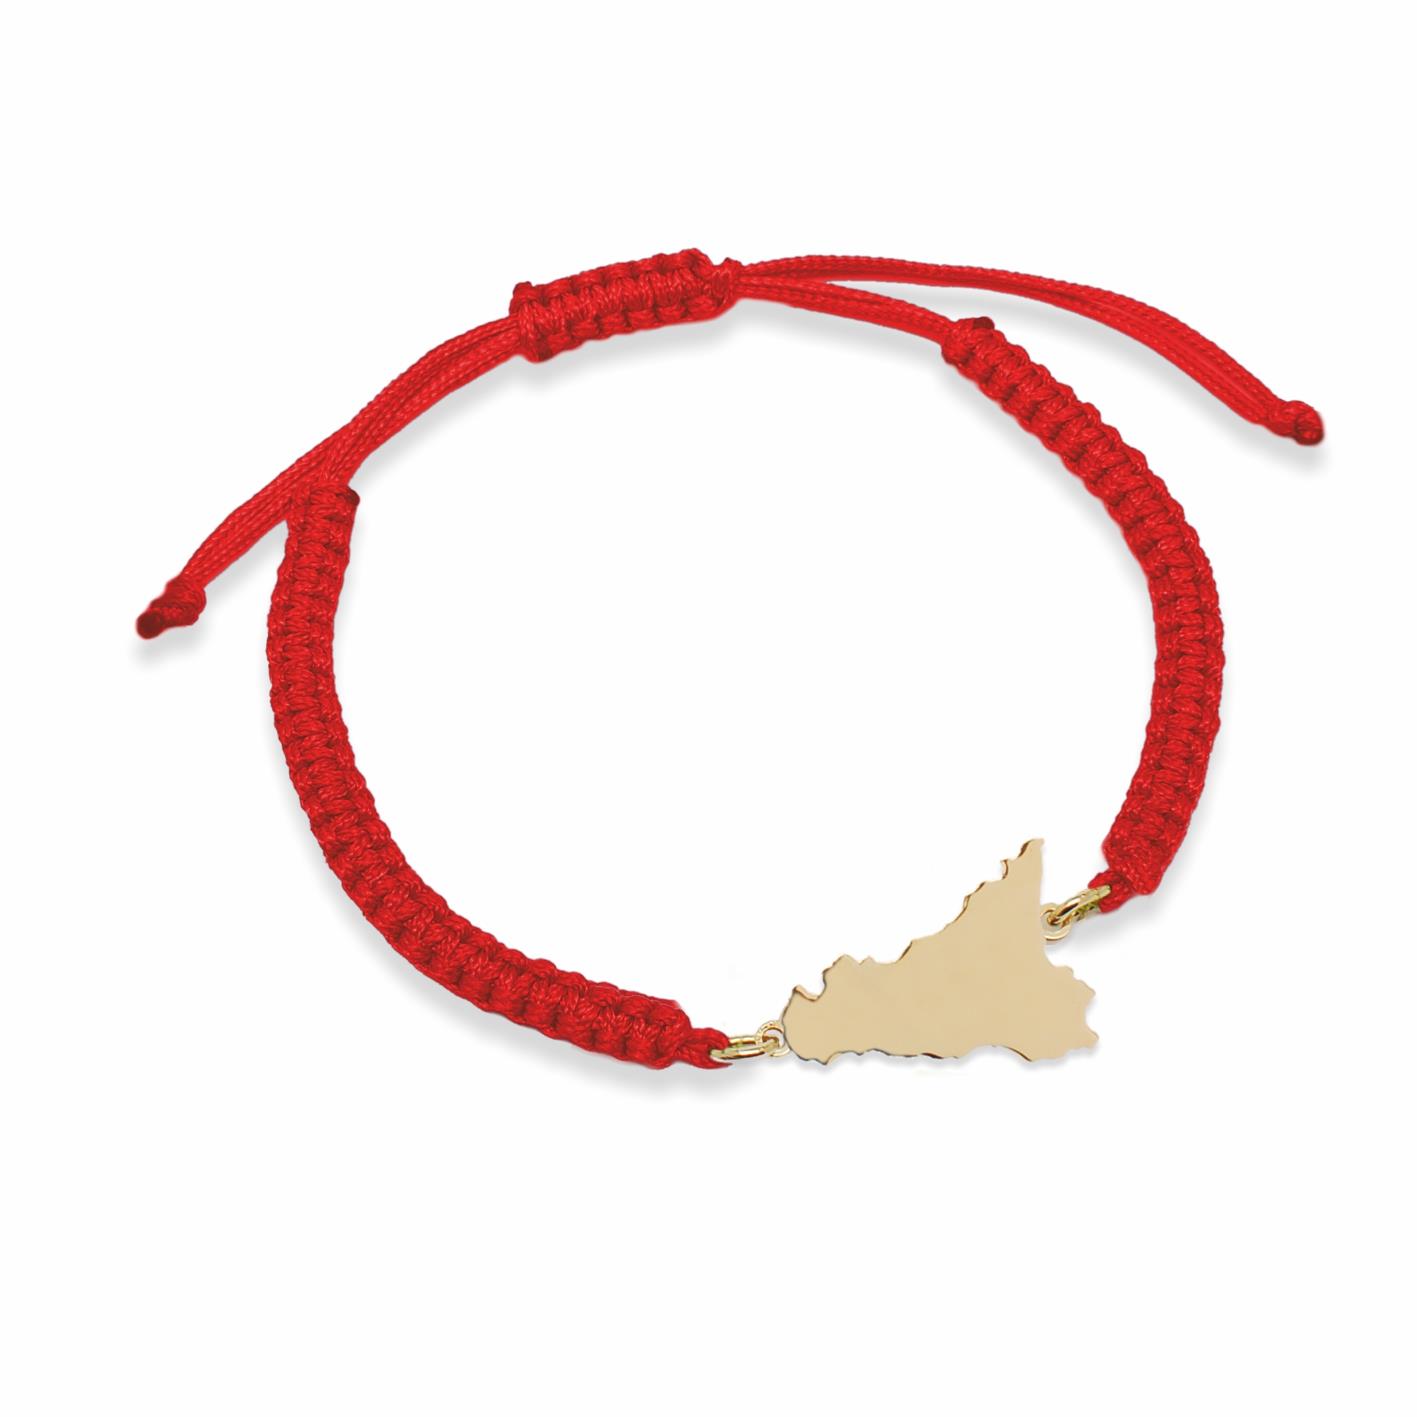 Red nylon bracelet with Sicily symbol in golden silver - MY SICILY